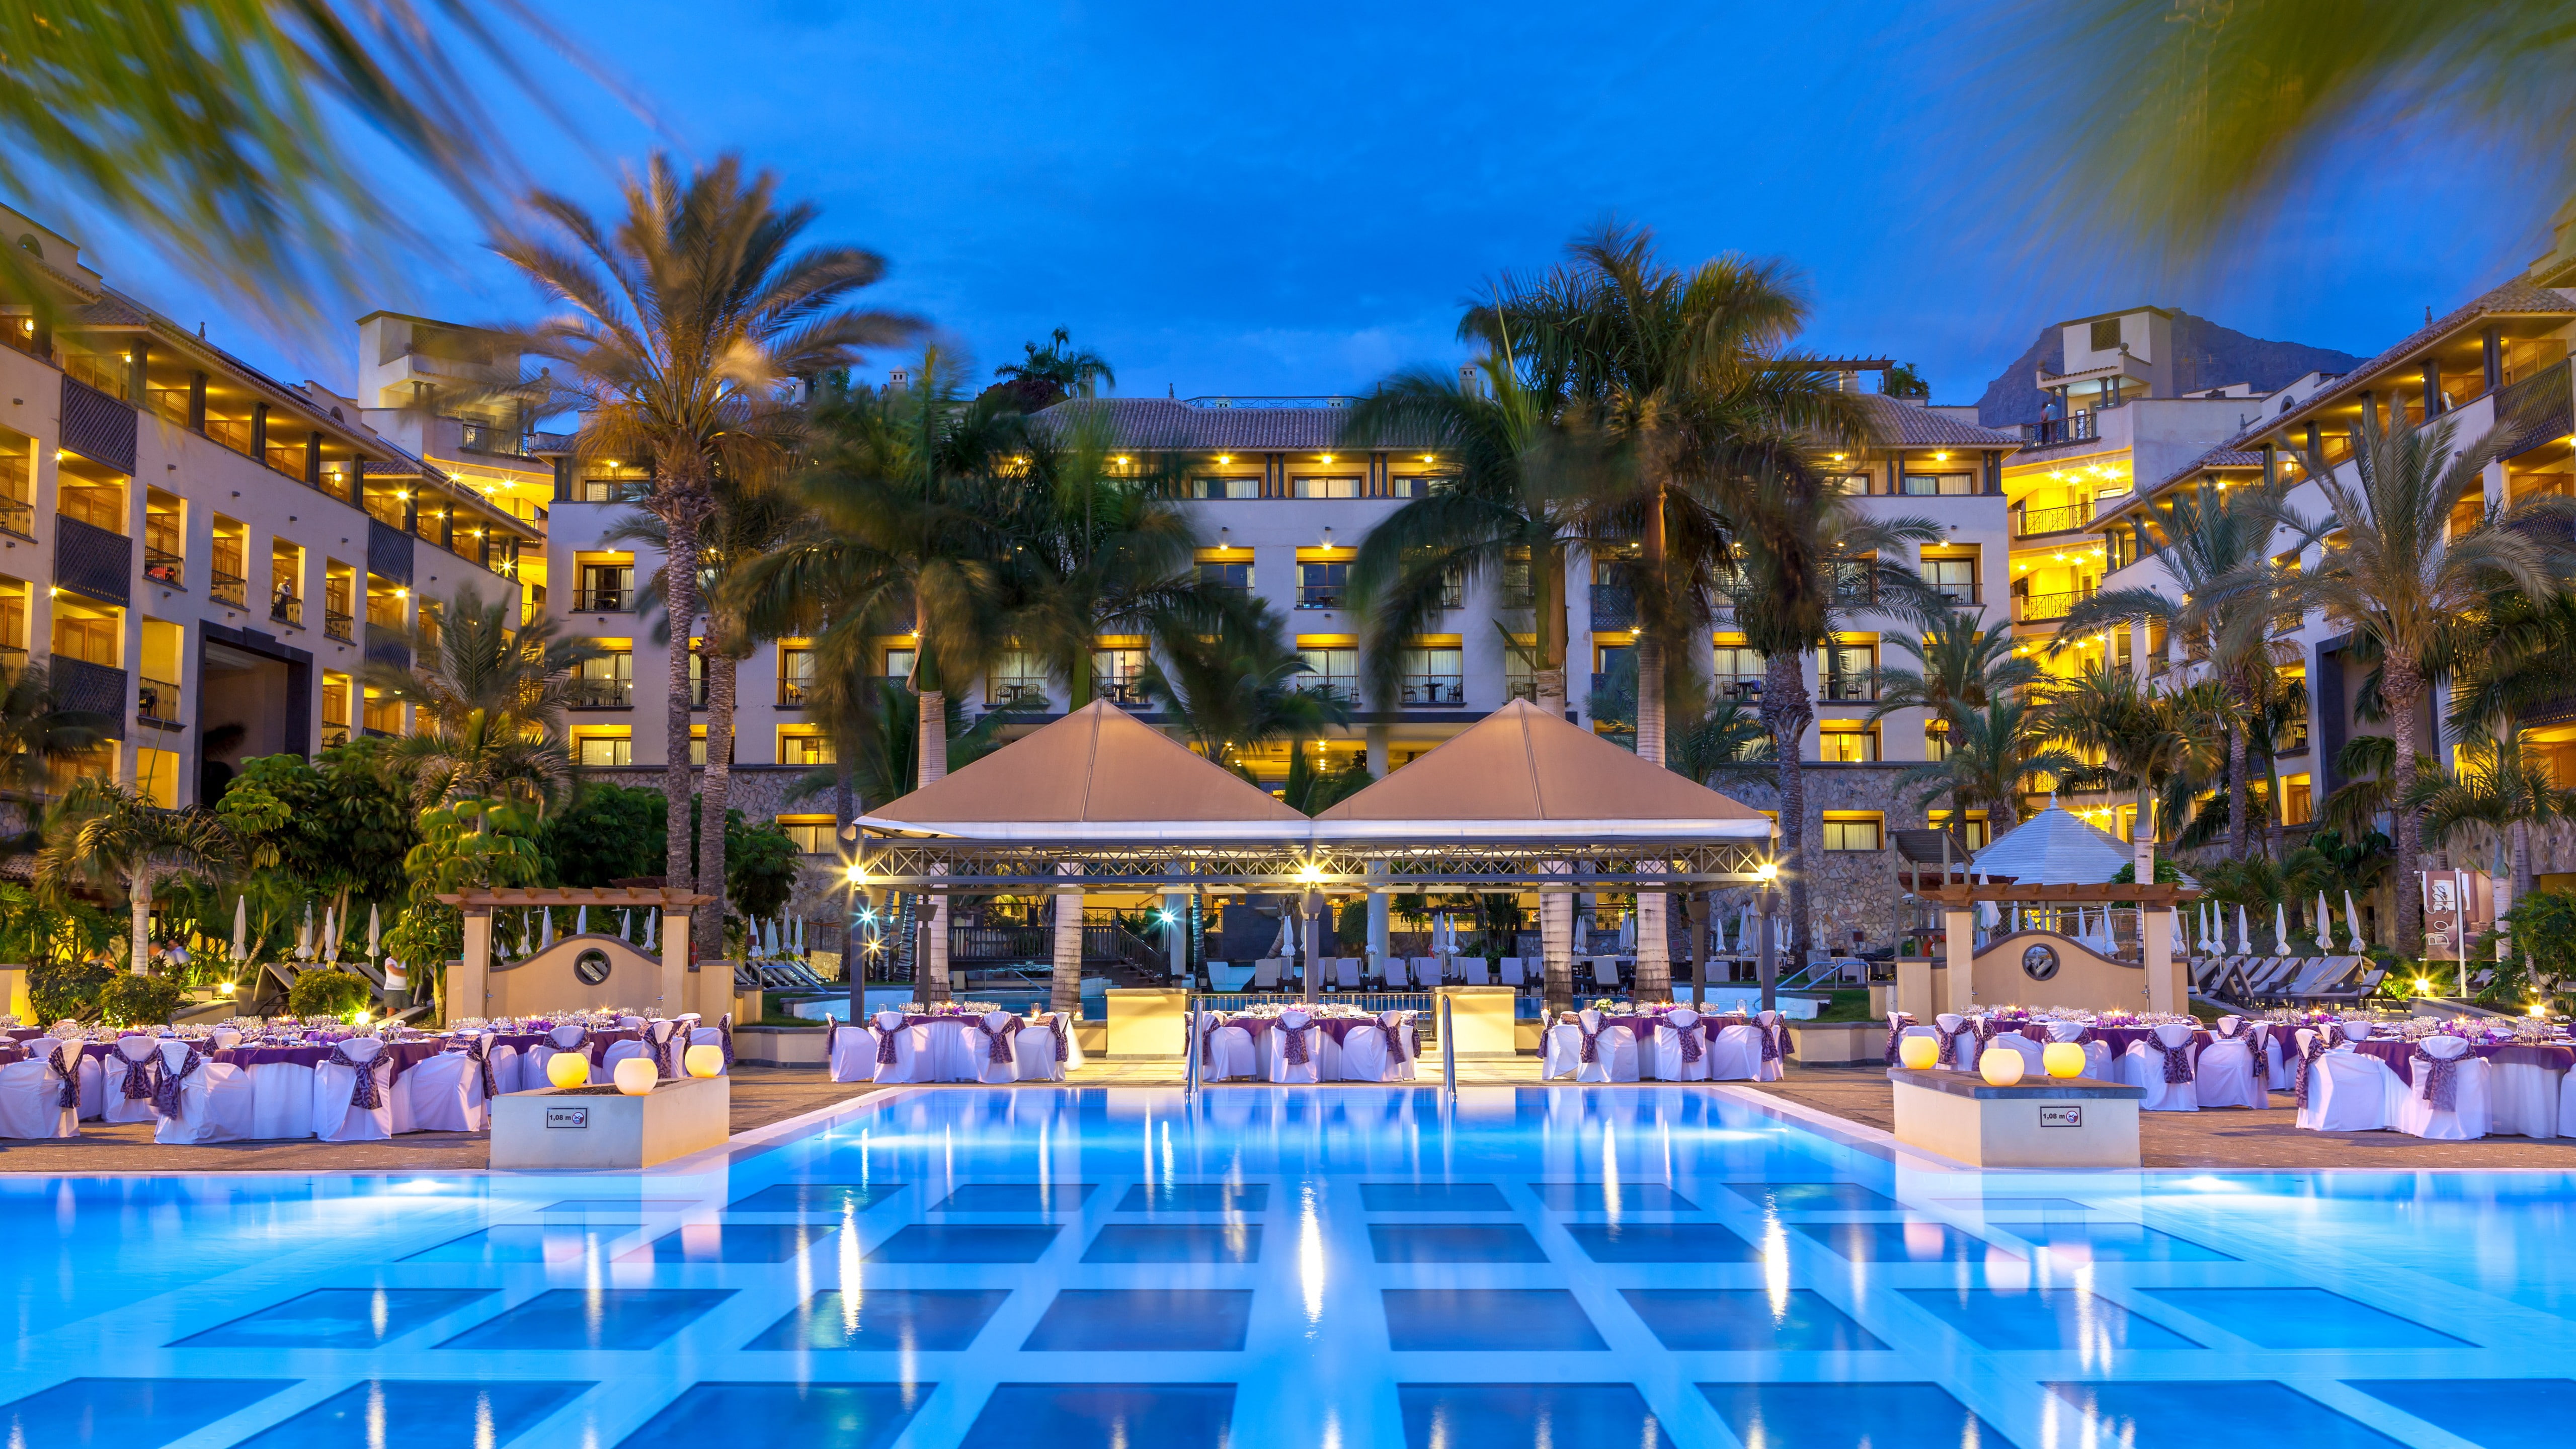 Costa Adeje Gran Hotel, Spain, Best Hotels of 2017, tourism